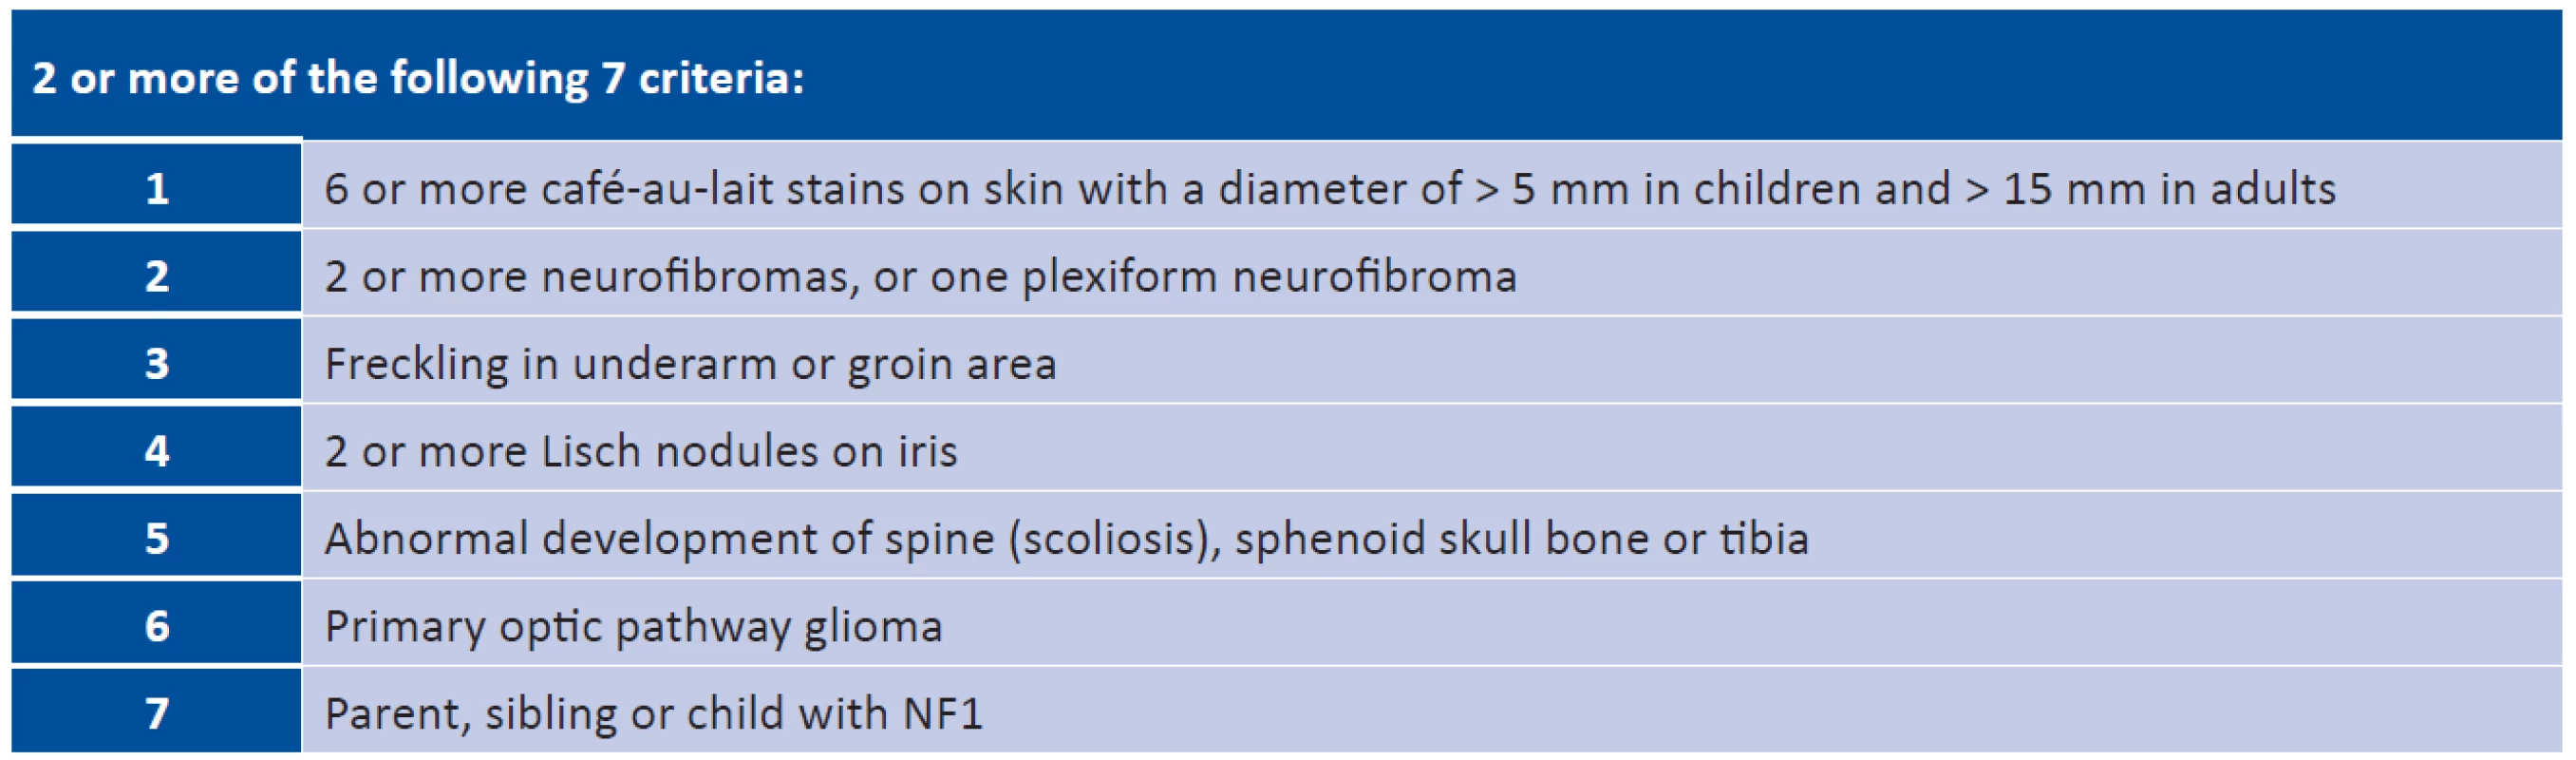 Neurofibromatosis type 1 – diagnostic criteria<br>
National Institute of Neurological Disorders and Stroke: Neurofibromatosis Fact Sheet (USA), 2011 (41)